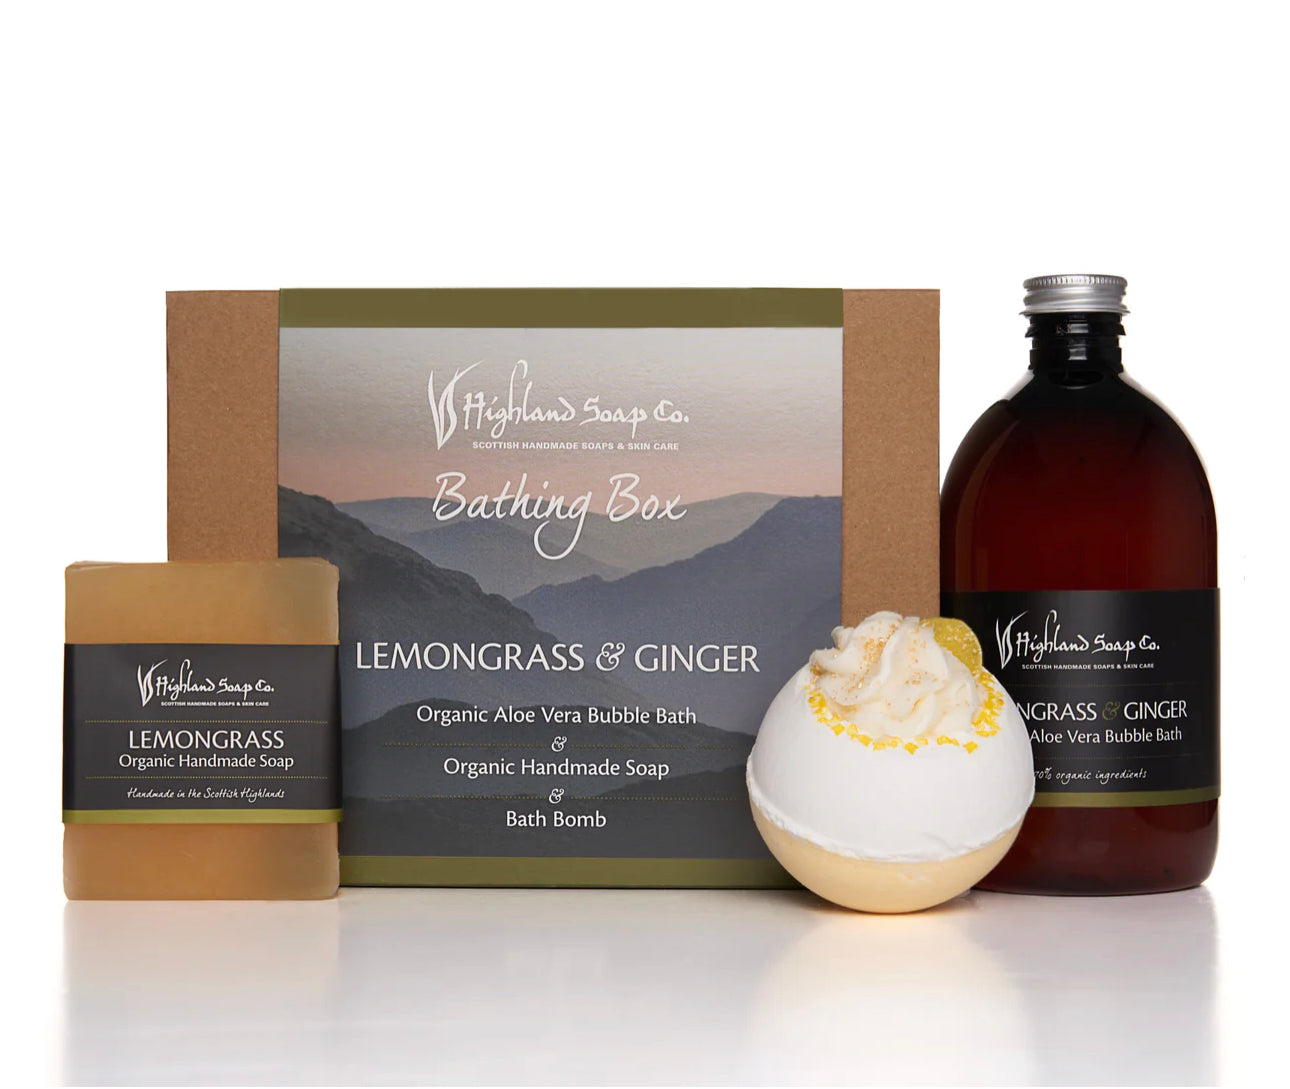 Highland Soap Company Bathing Box Lemongrass & Ginger